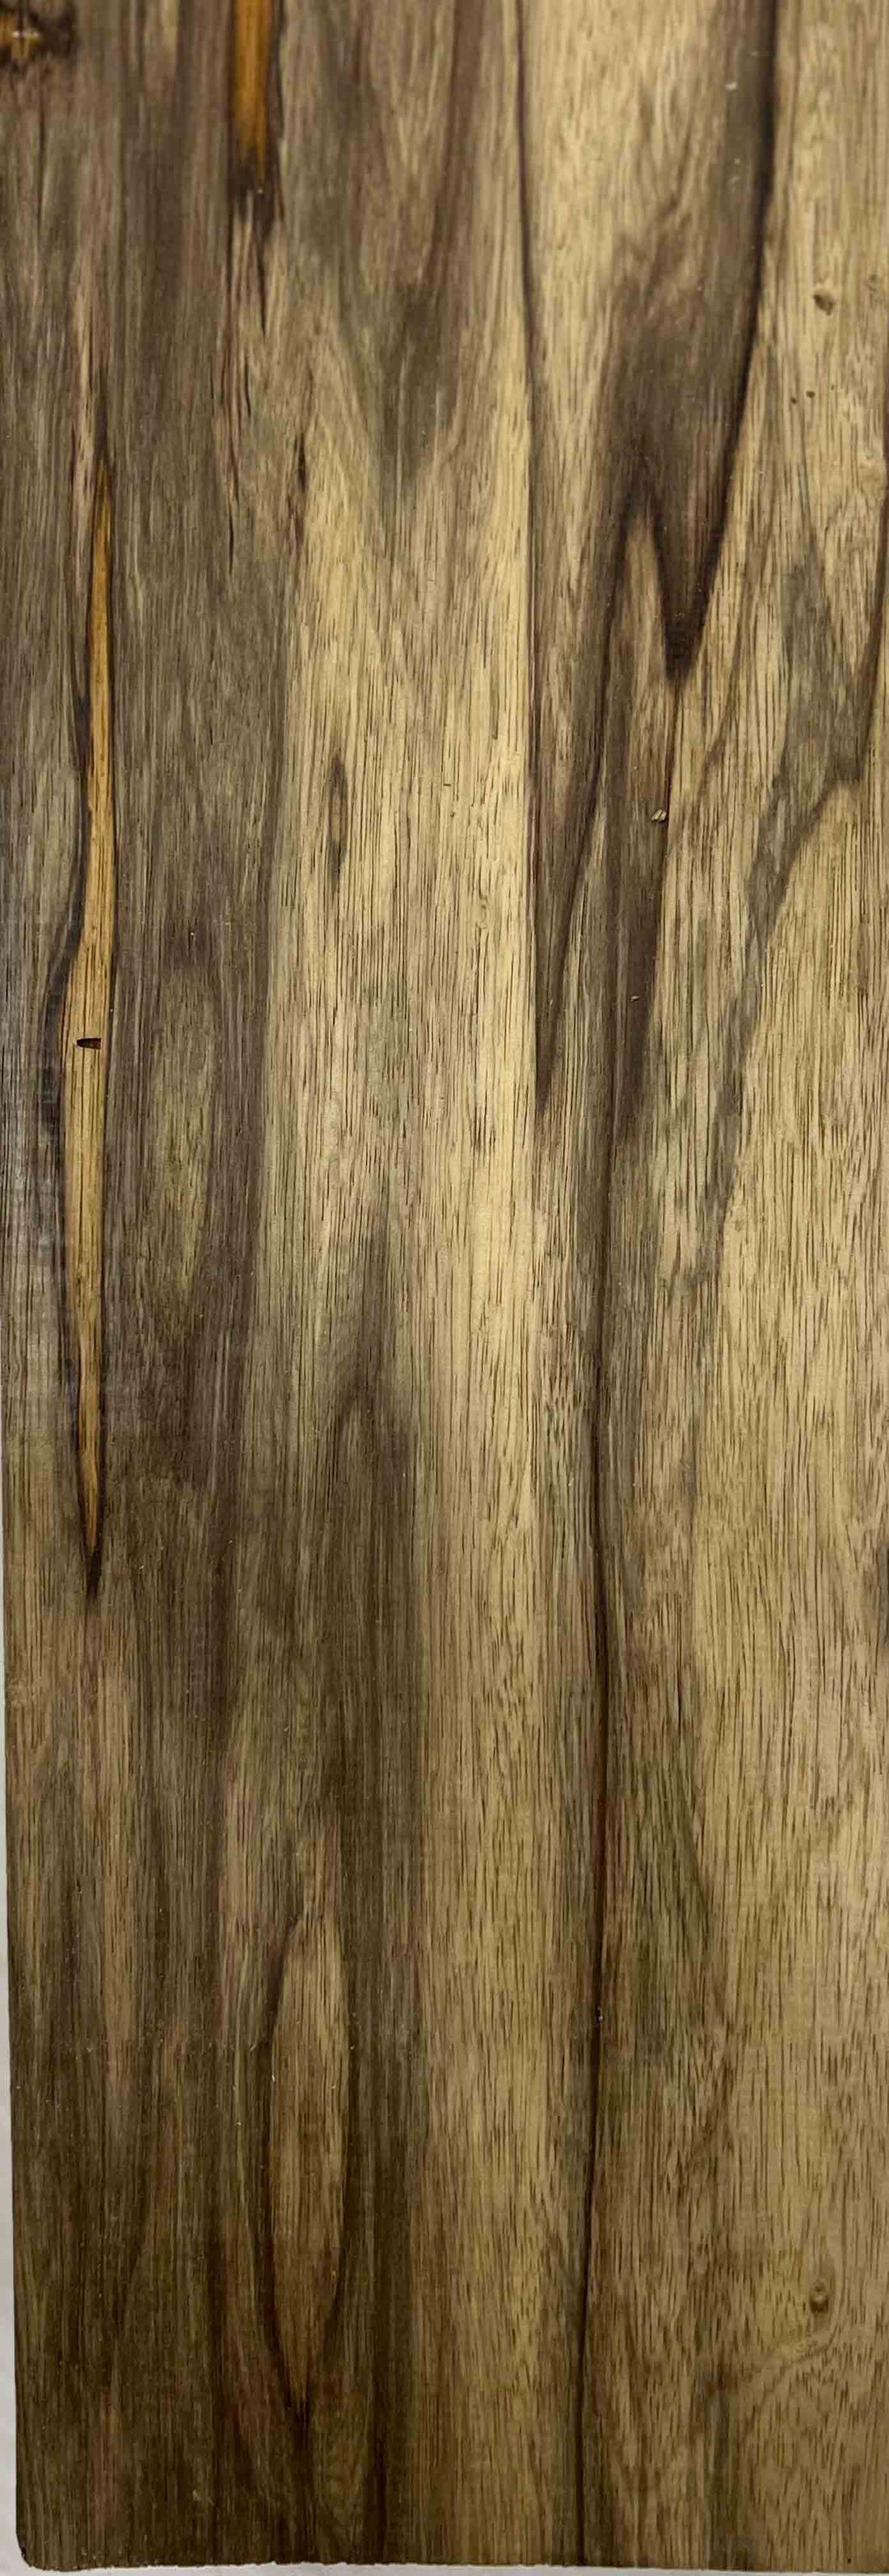 Premium Black Limba 8/4 Lumber - Exotic Wood Zone - Buy online Across USA 